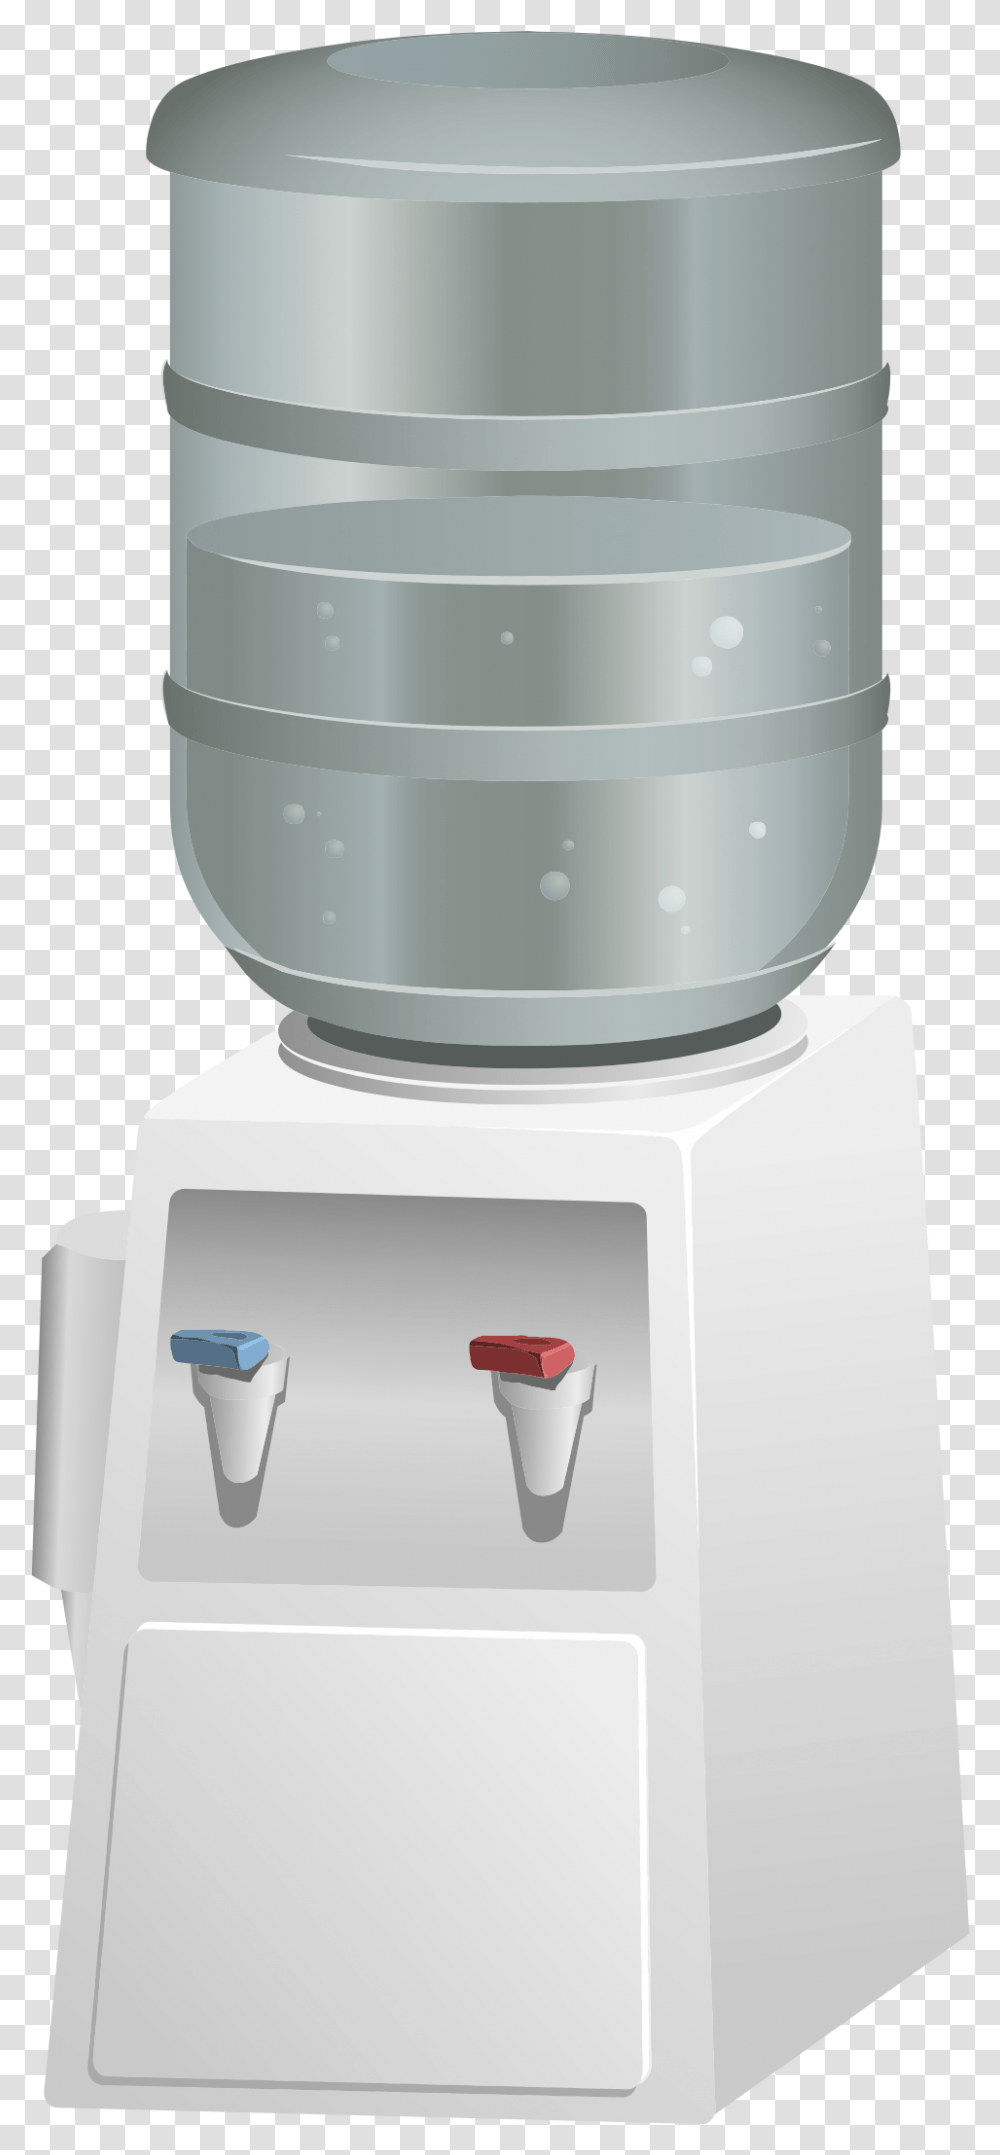 Water Cooler Enfriador De Aguas, Appliance, Mixer Transparent Png